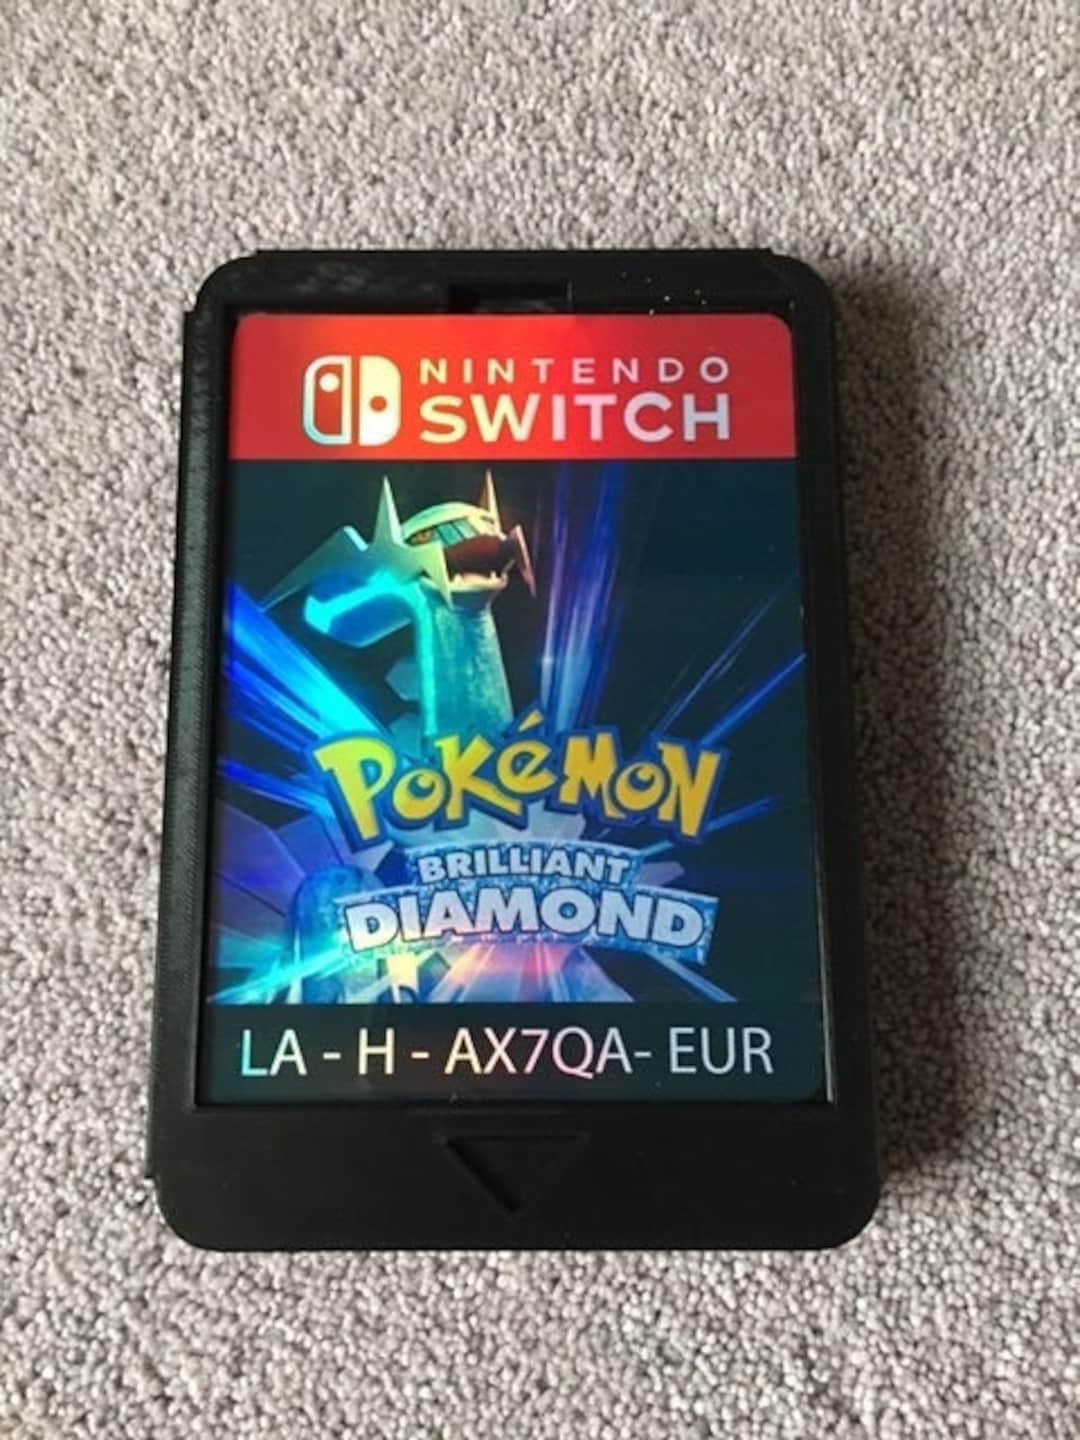 ▷ Chollo Pokemon Diamante Brillante para Nintendo Switch por sólo